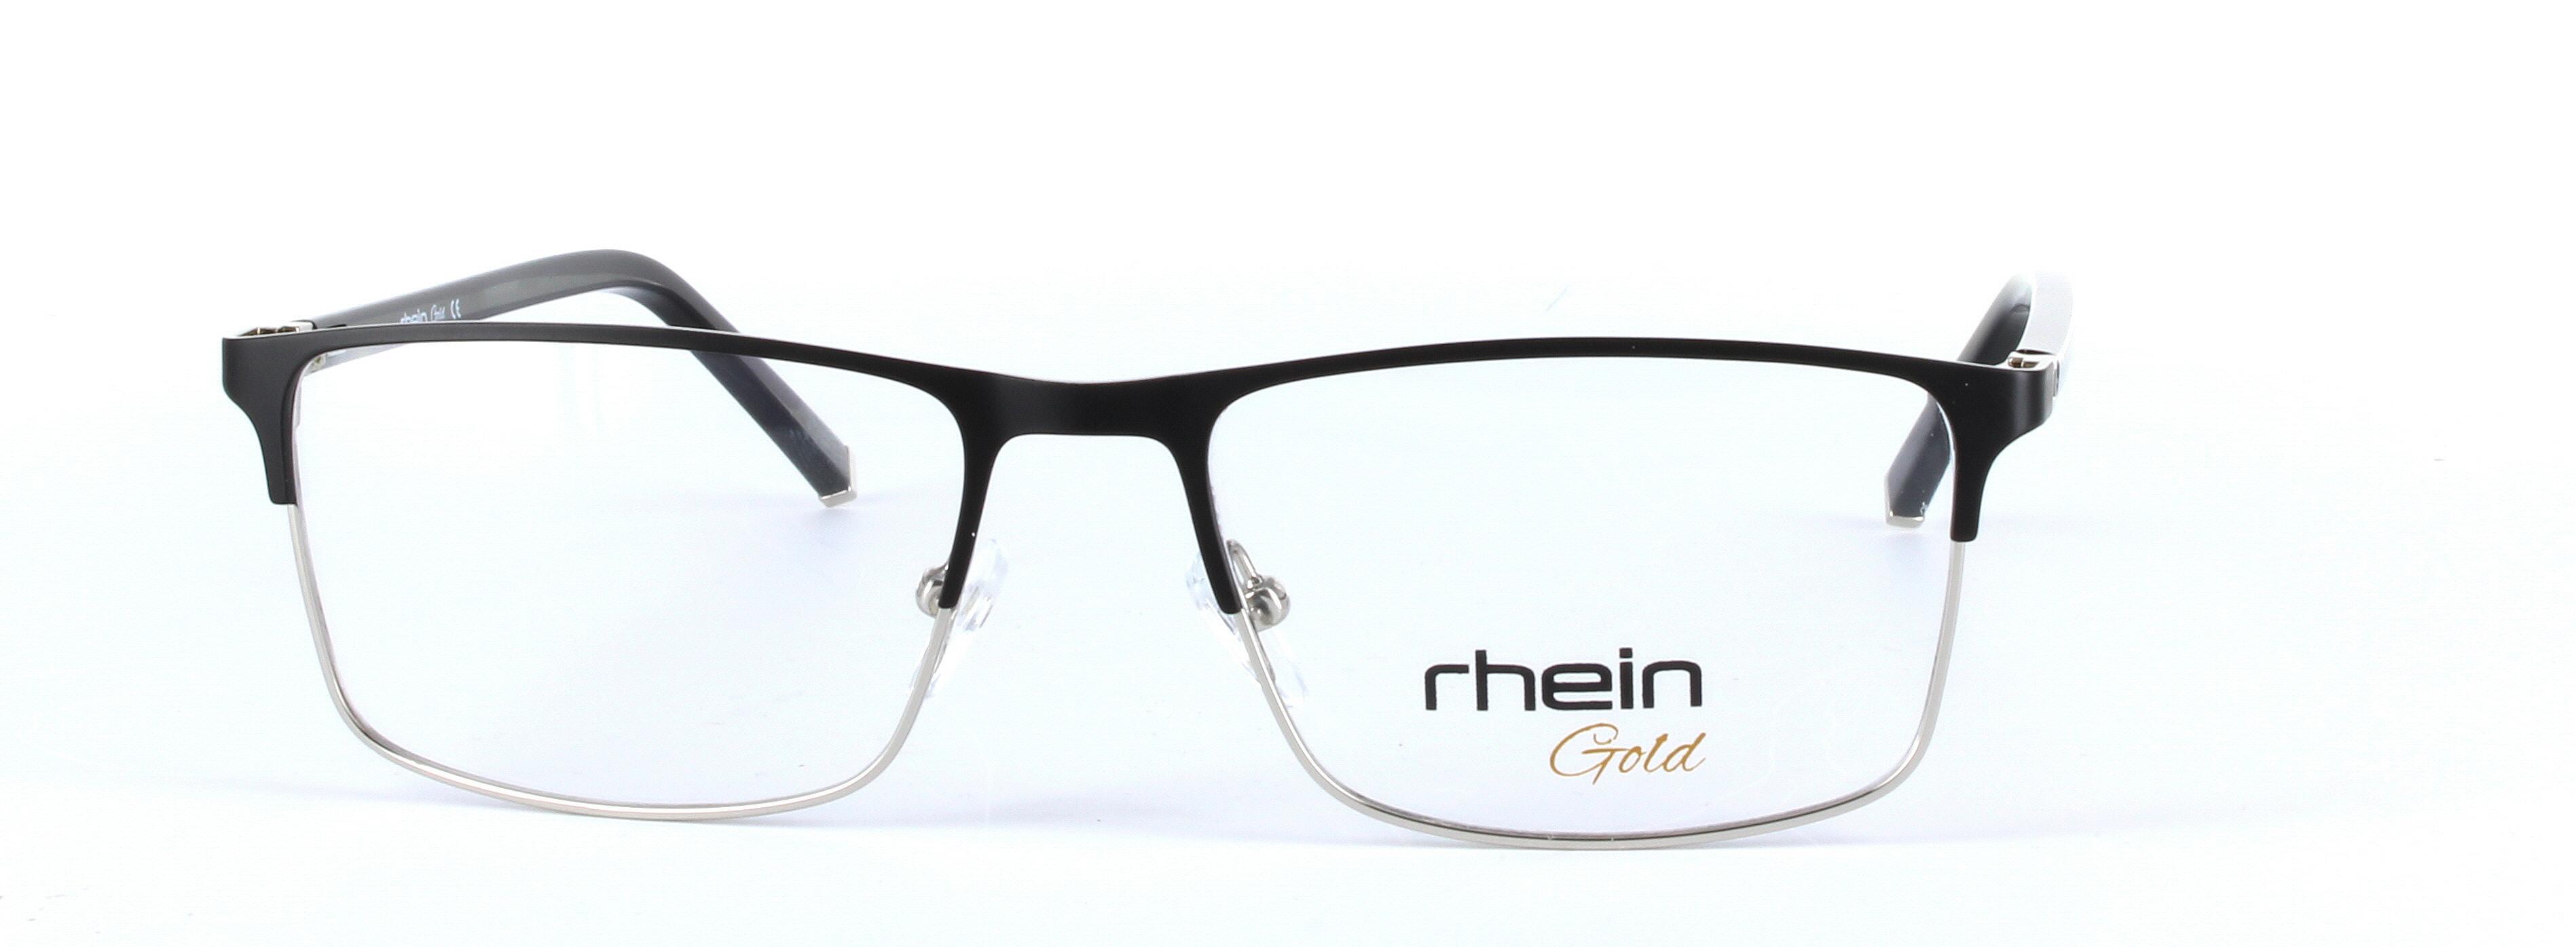 Faith Black Full Rim Oval Rectangular Metal Glasses - Image View 5